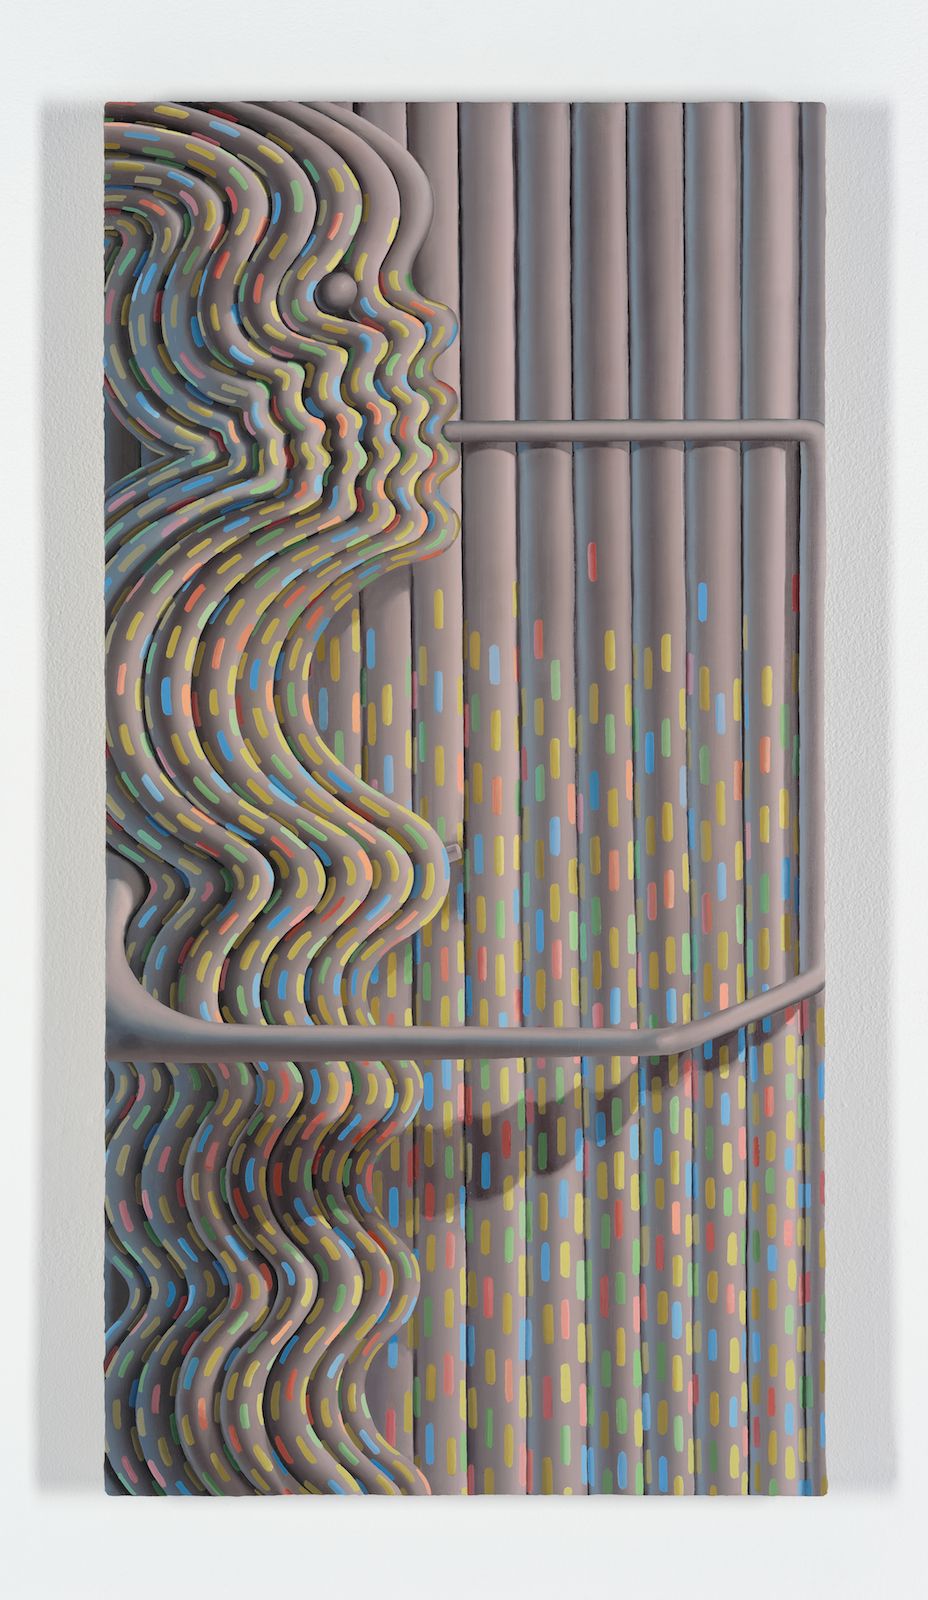 Sascha Braunig, Feeder, 2014, oil on linen over panel, 31 x 16 in.